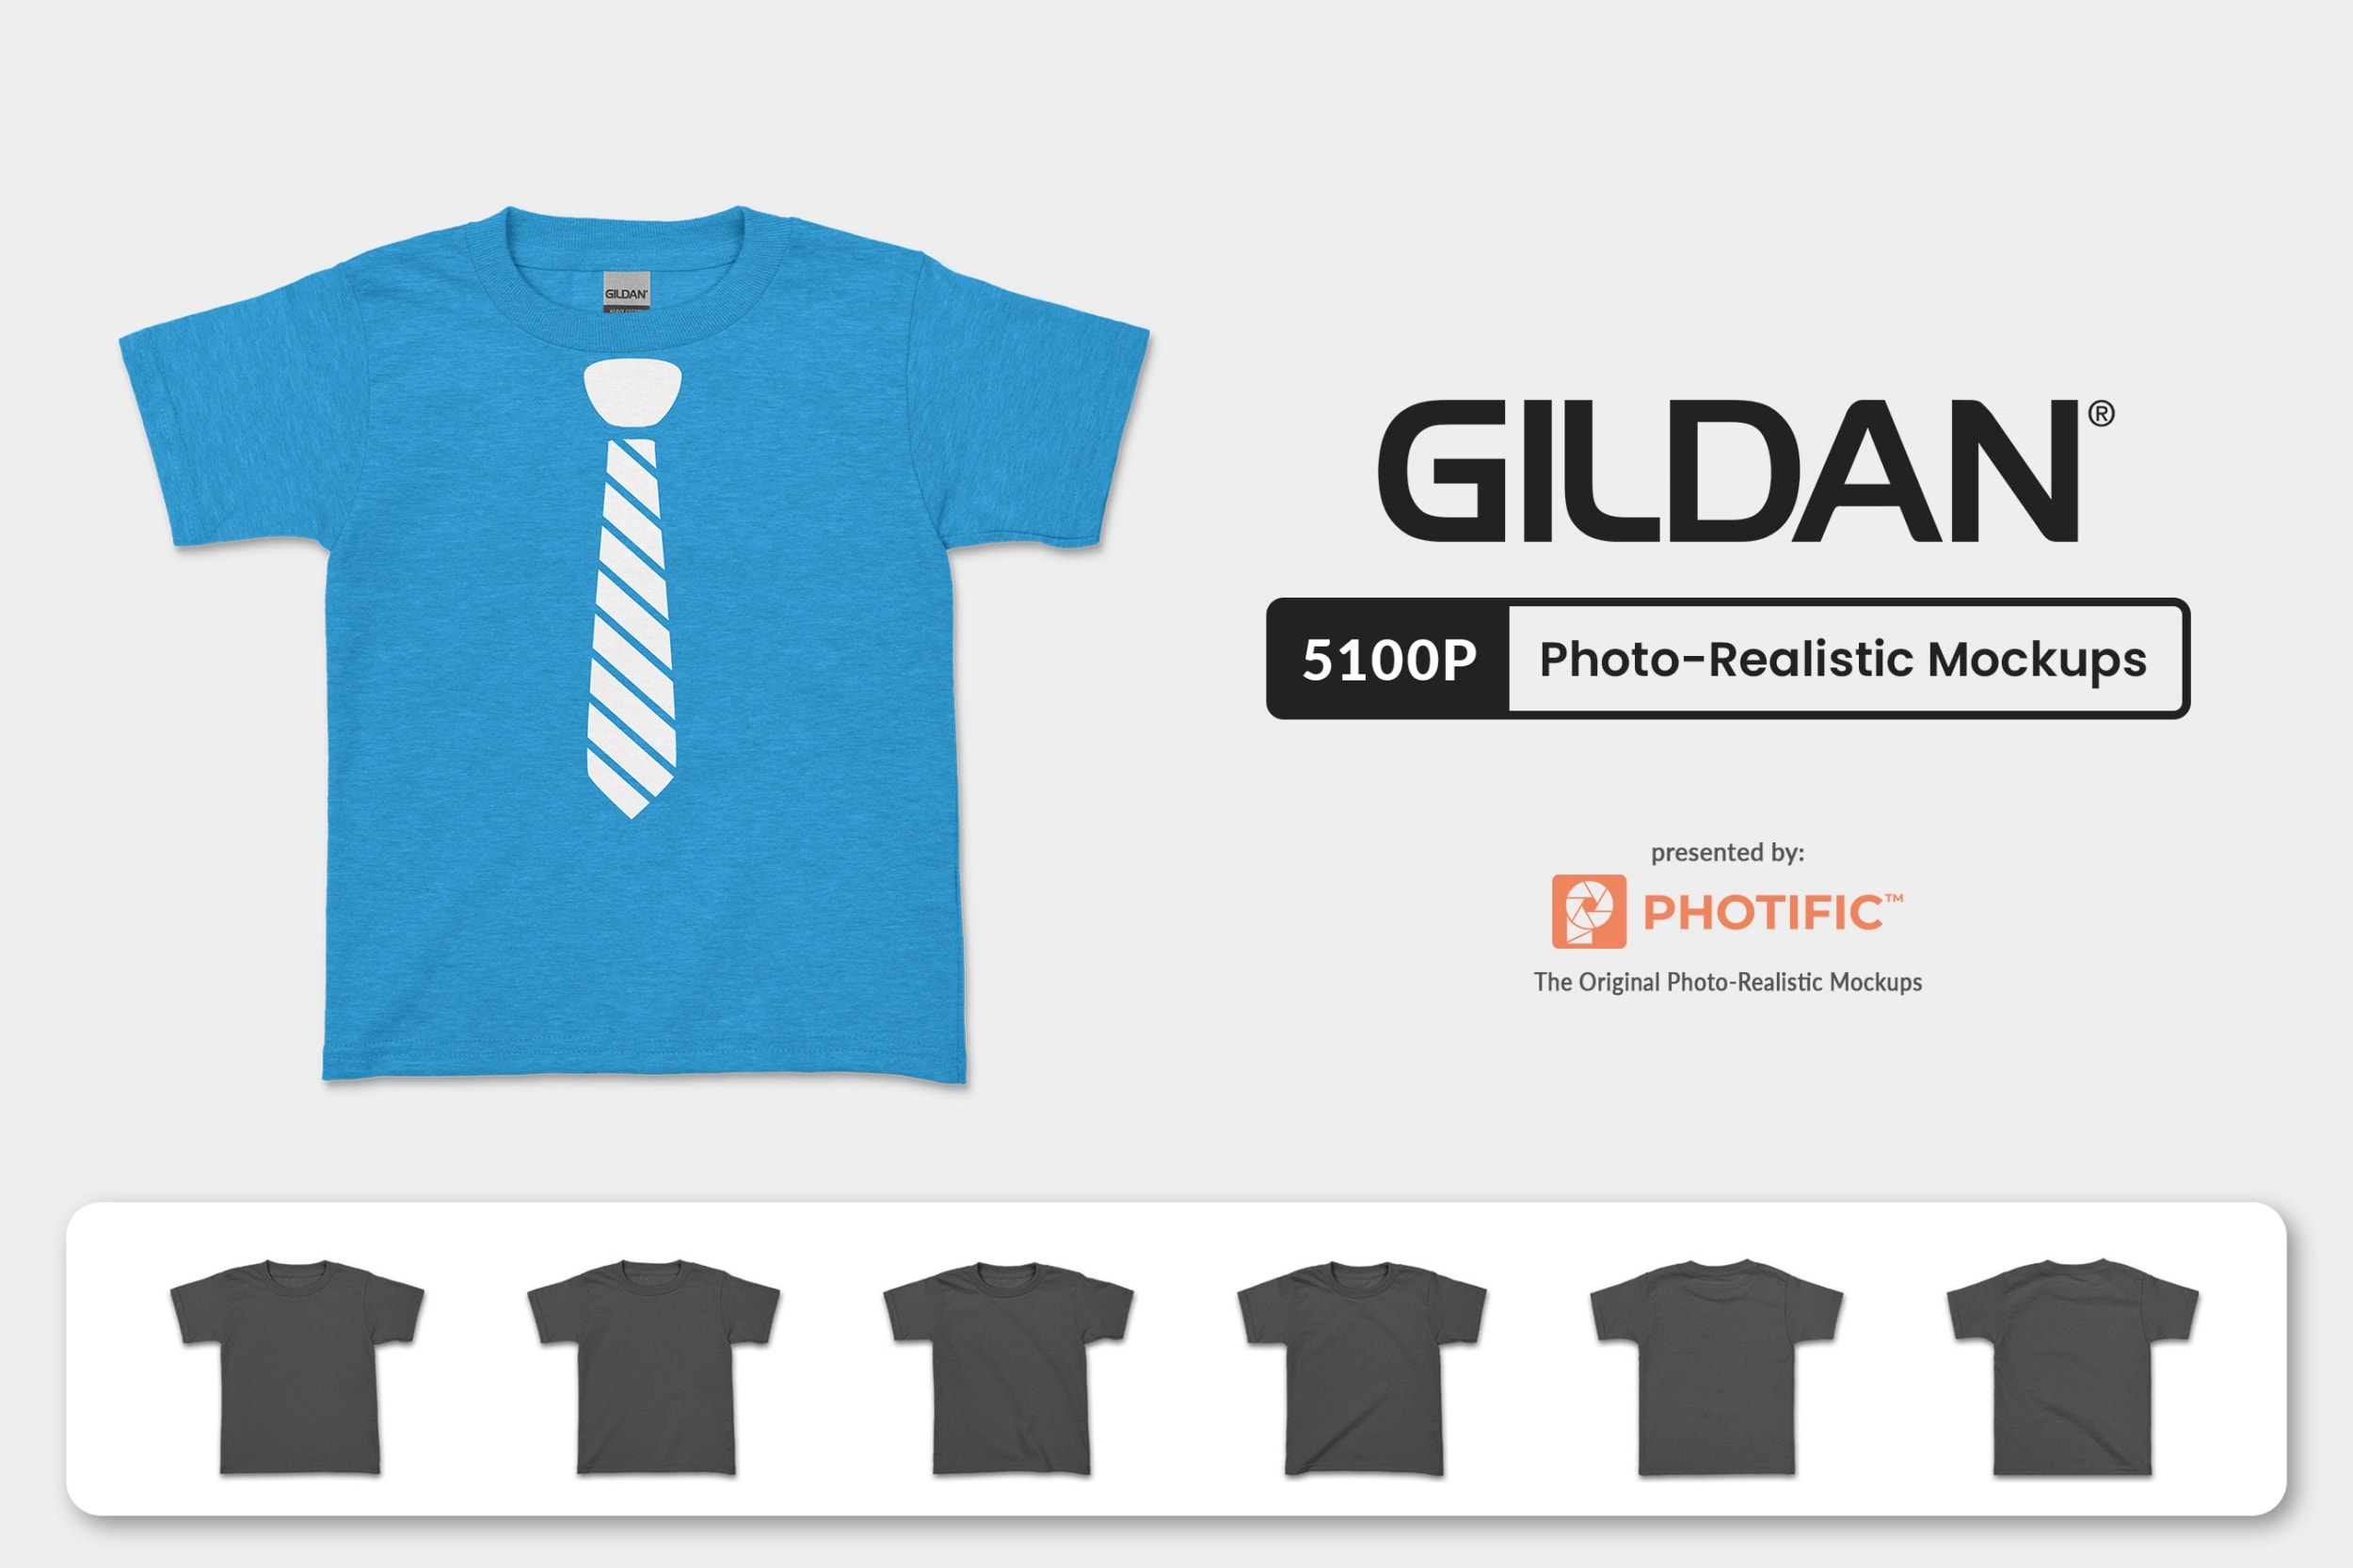 Gildan 5100p Preview Image Web